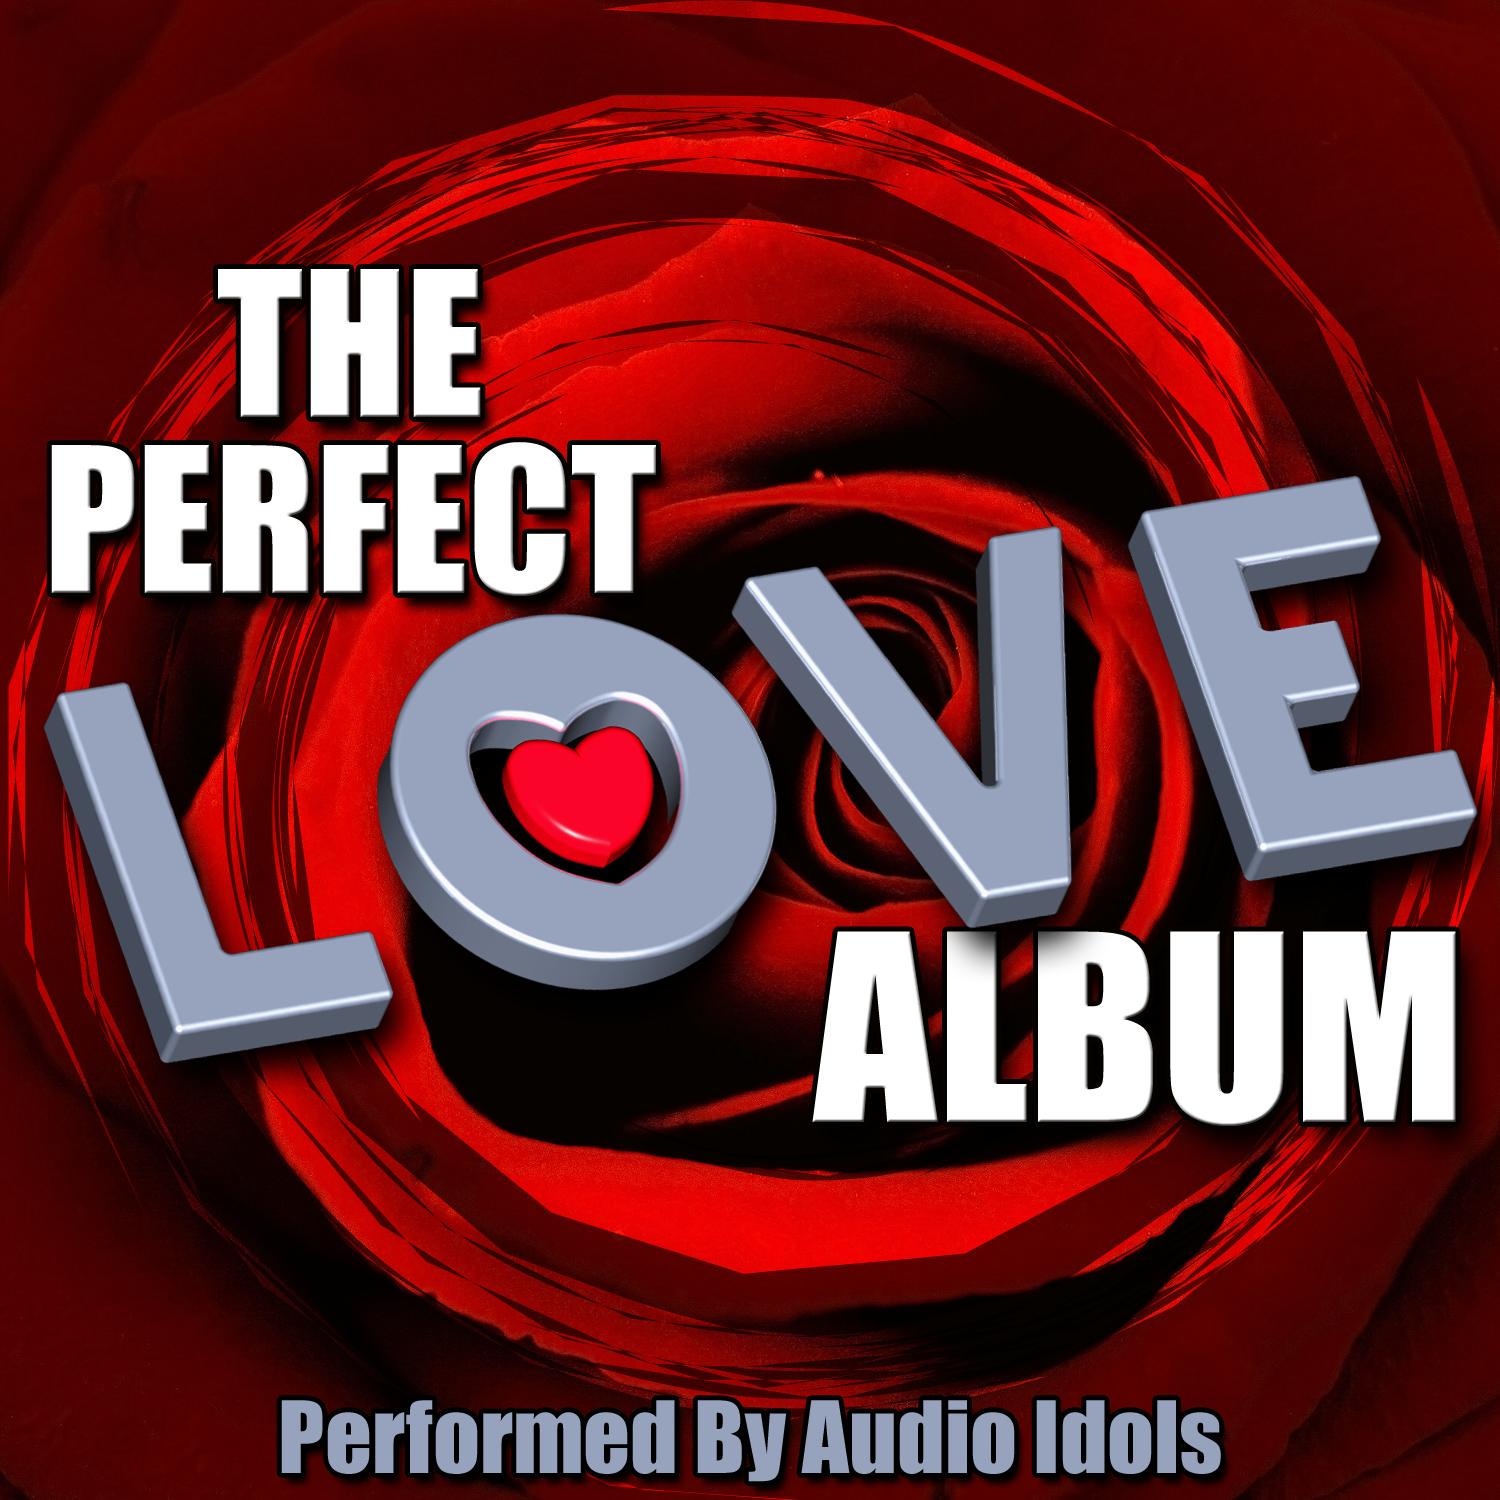 The Perfect Love Album